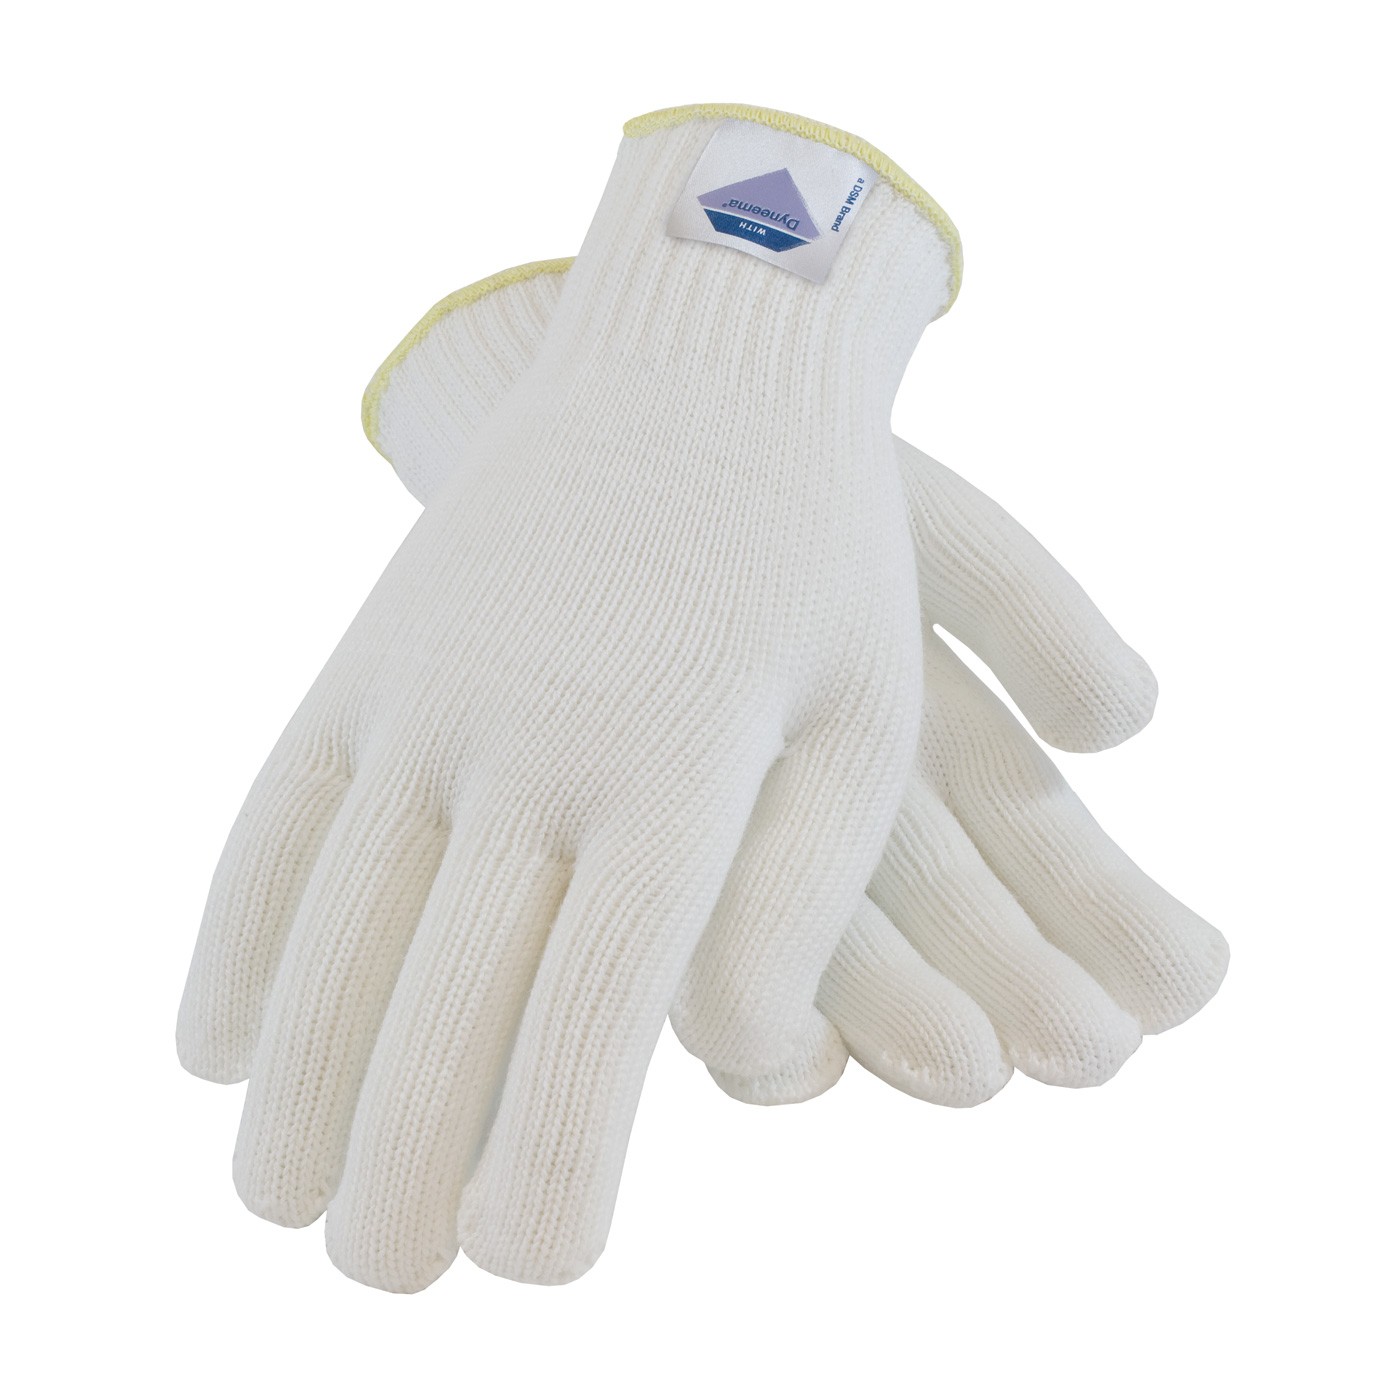 Gloves with Spun Dyneema, 7 Gauge, White, Medium Weight, ANSI2 Size Small